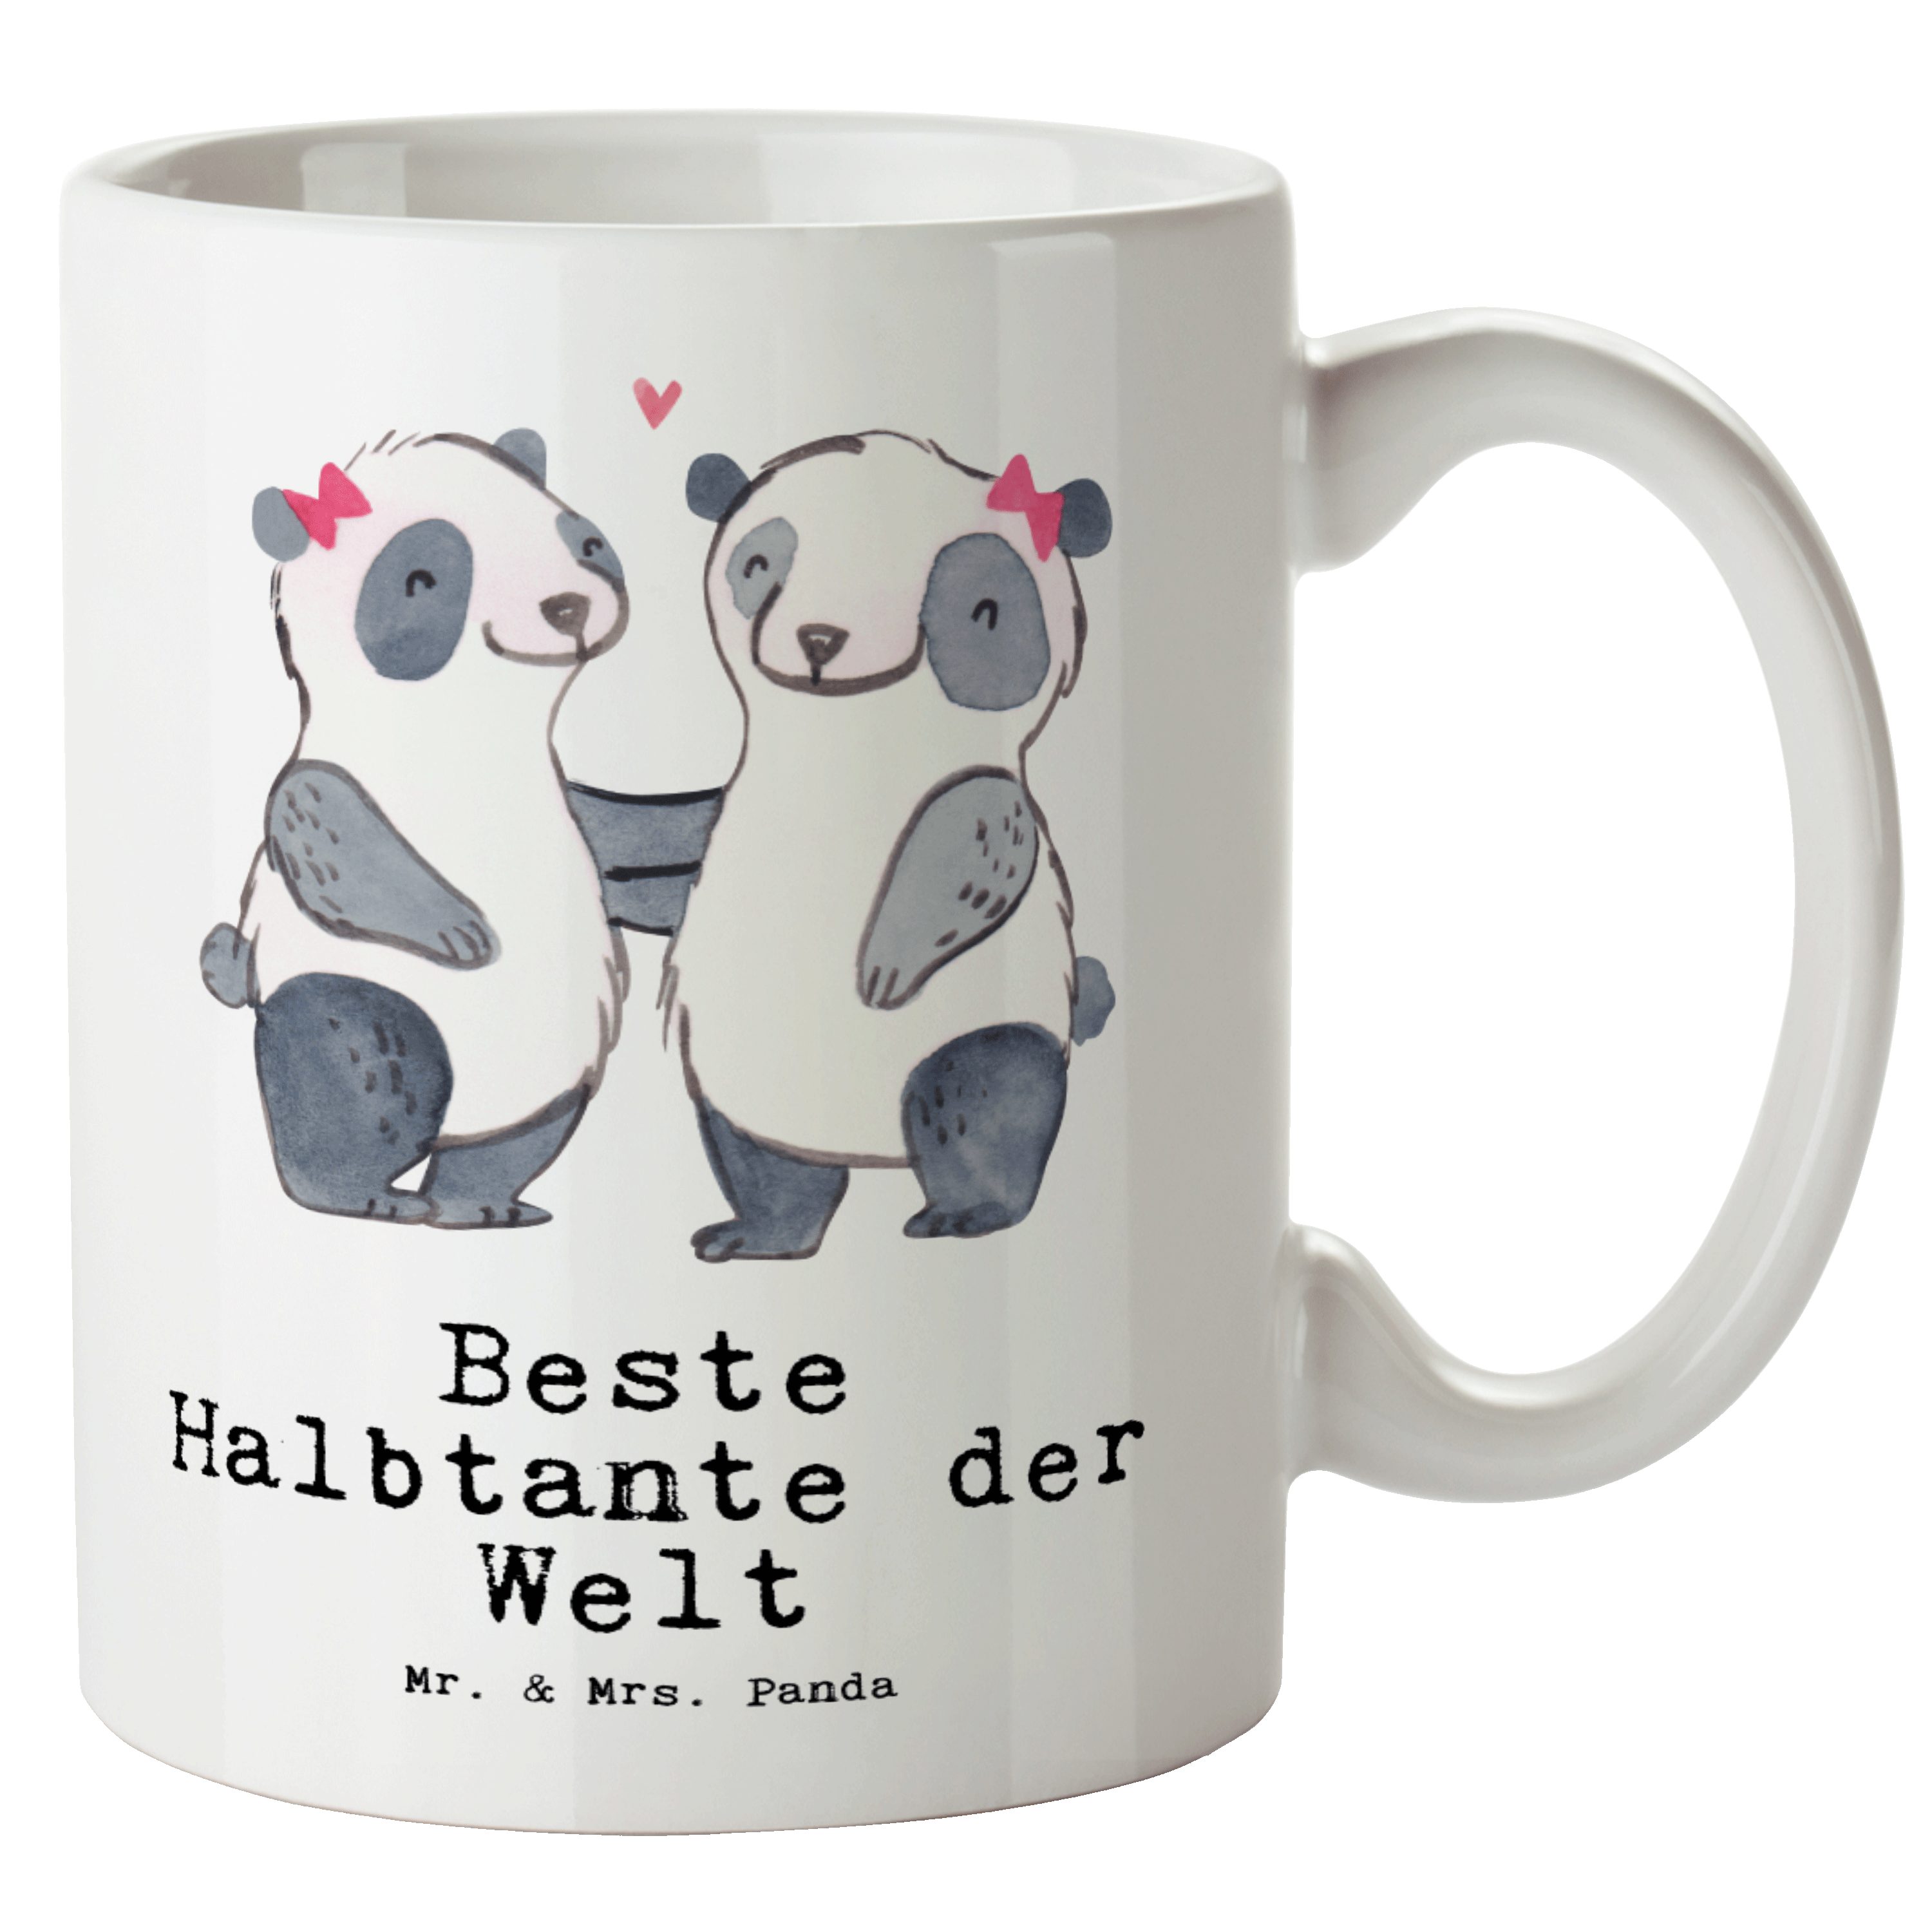 Mr. & Mrs. Panda Tasse Panda Beste Halbtante der Welt - Weiß - Geschenk, XL Becher, spülmasc, XL Tasse Keramik